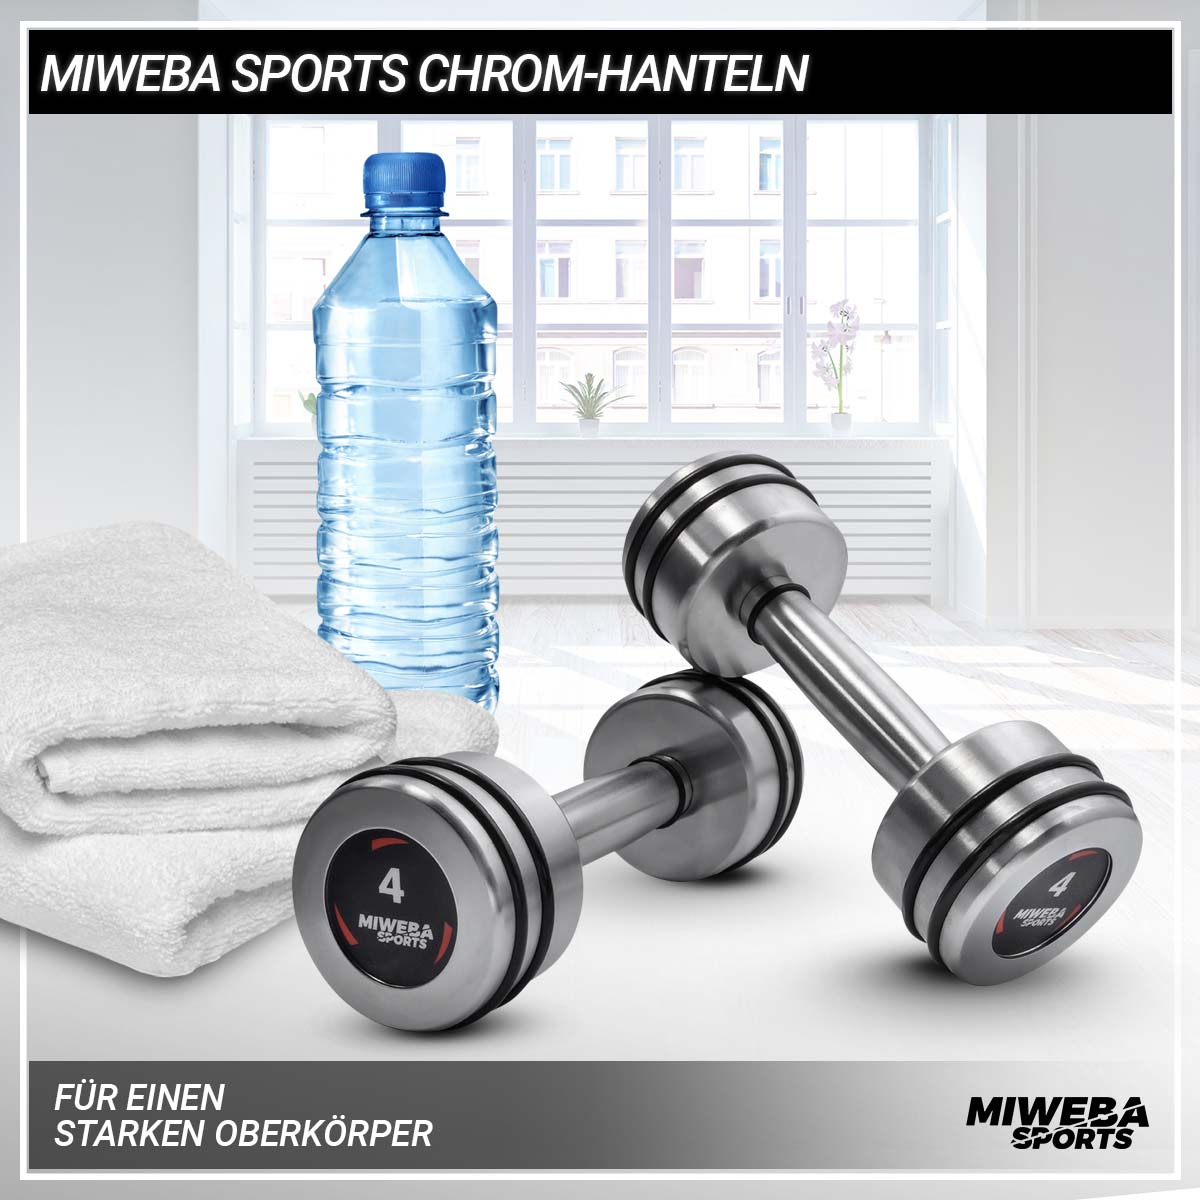 MIWEBA SPORTS Fitnesszubehör Chrom kg Matt 2x Kurzhanteln, Hanteln 4.0 silber